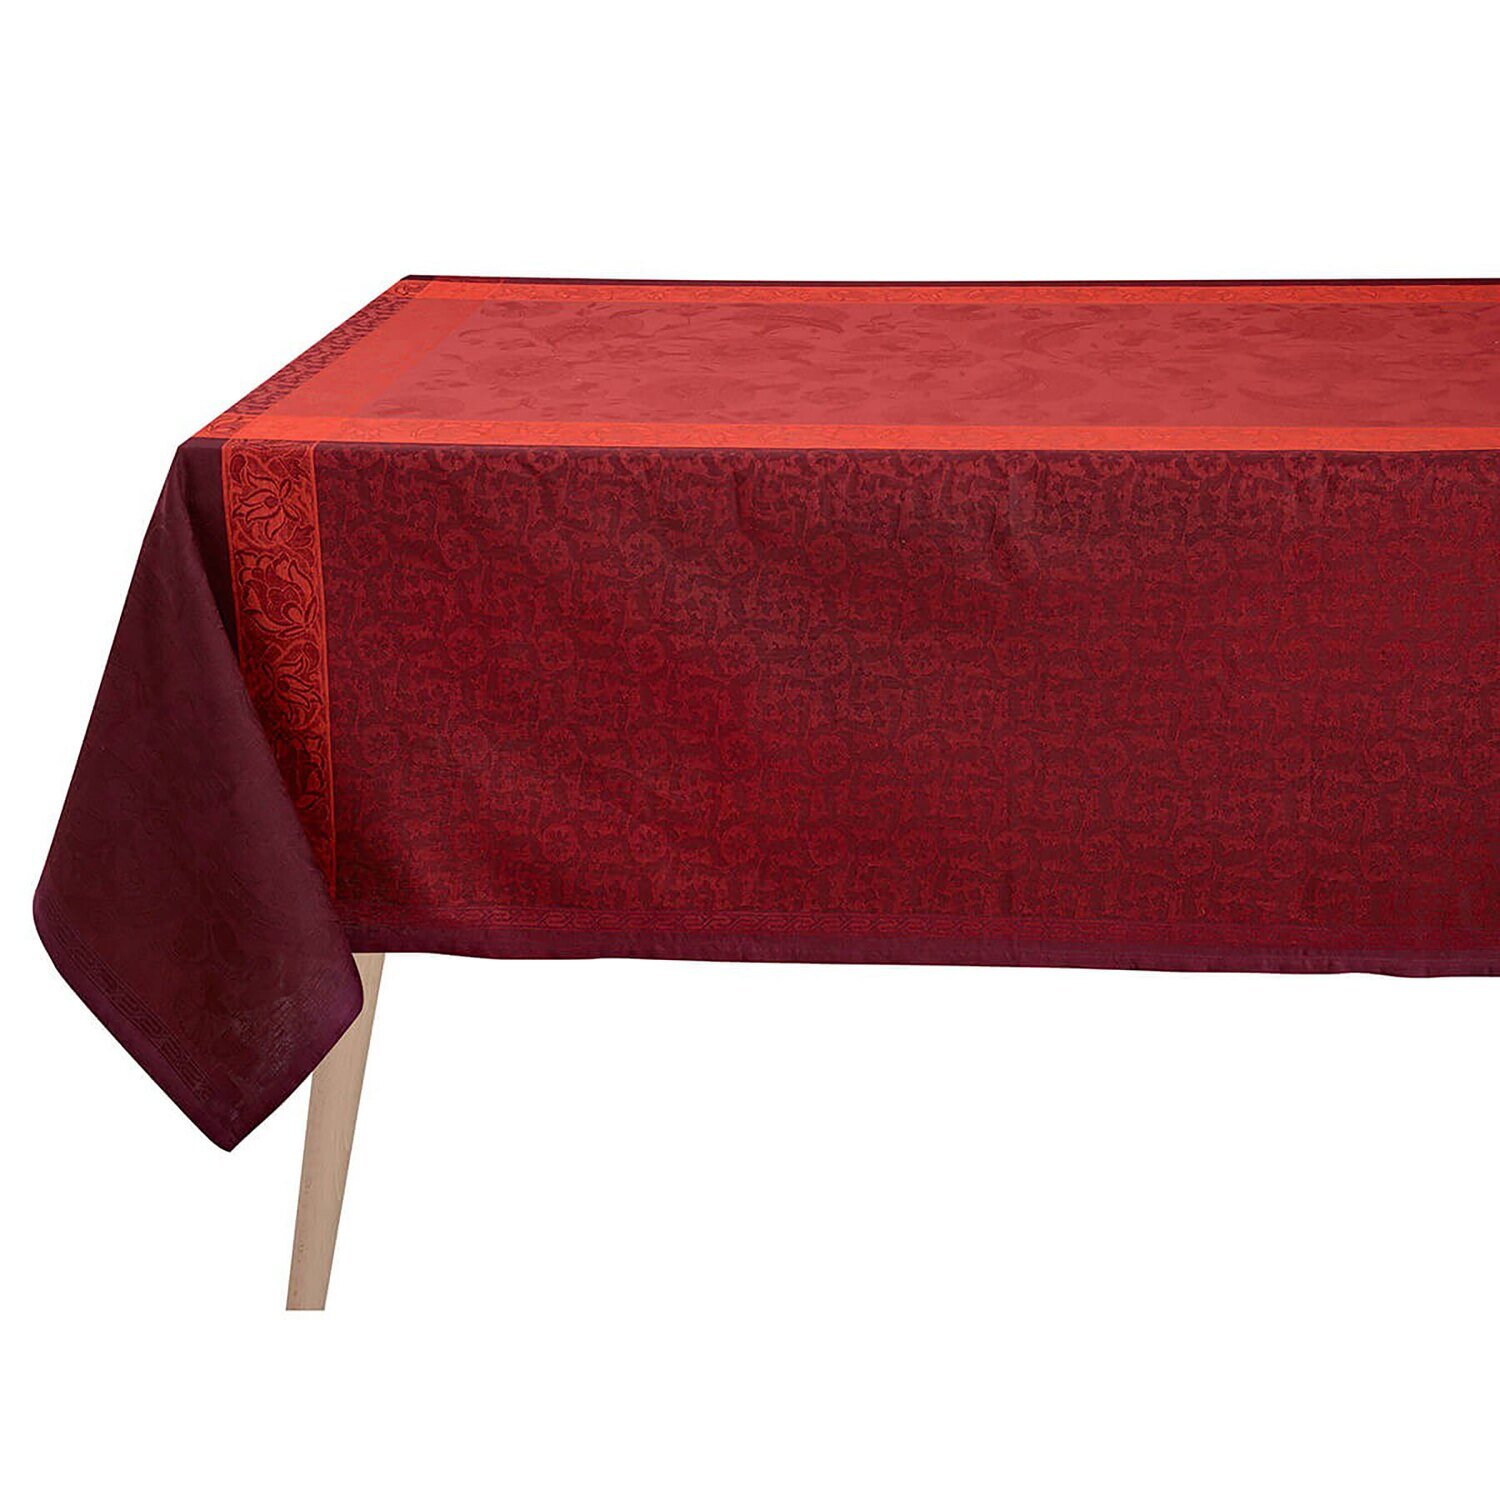 Le Jacquard Tablecloth Ottomane Burgundy 175 x 380 100% Linen 26541